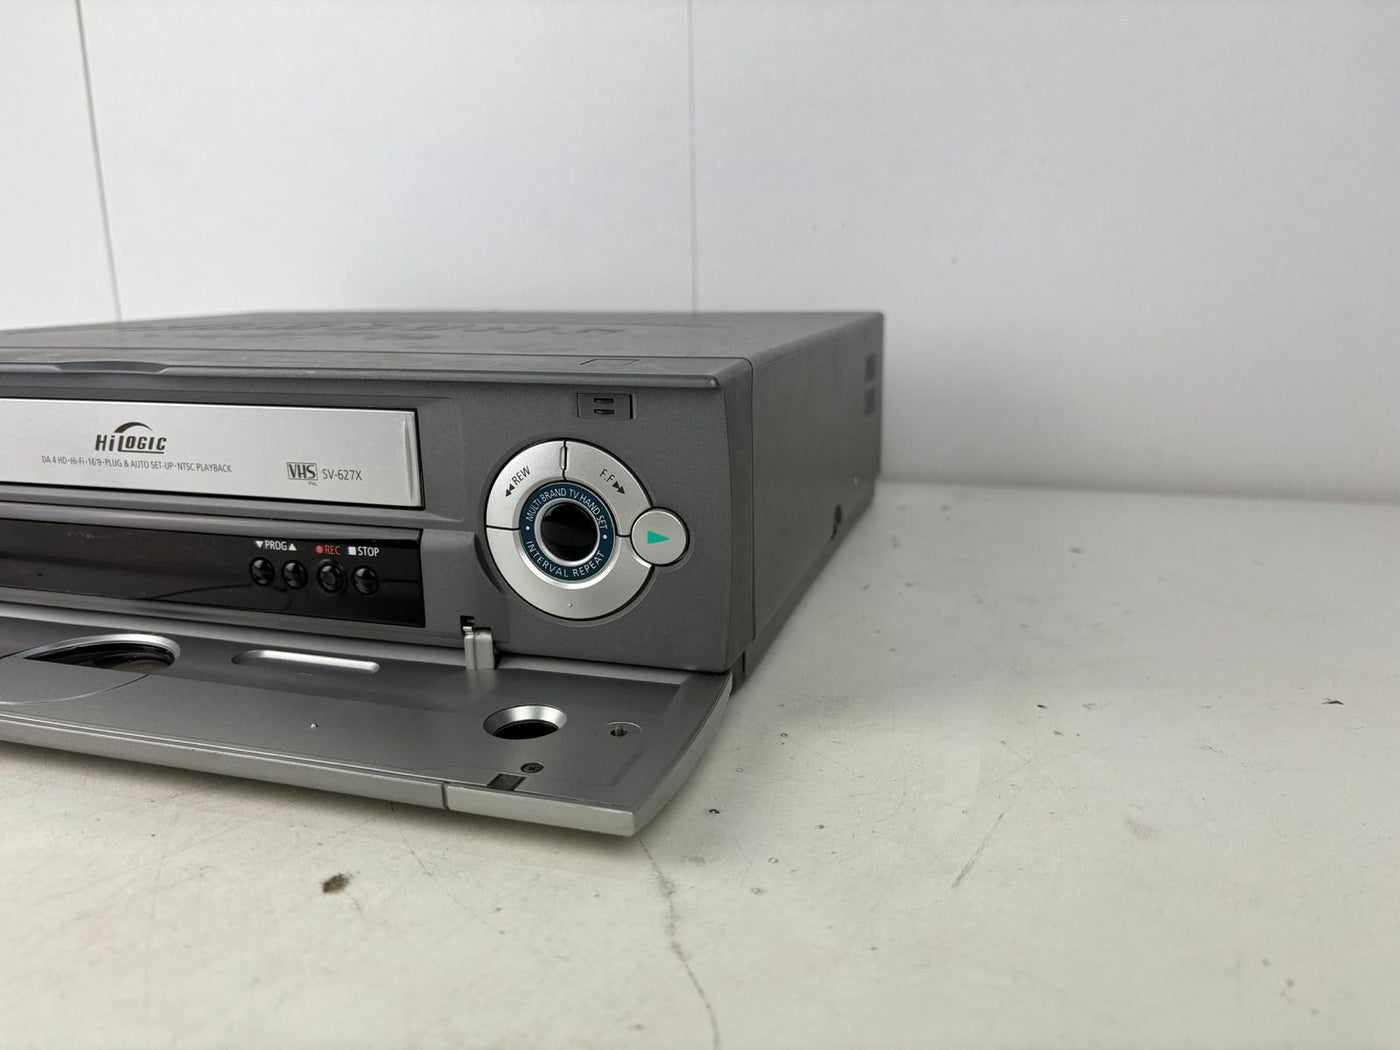 Samsung SV-627X Video Cassette Recorder Diamond Head!